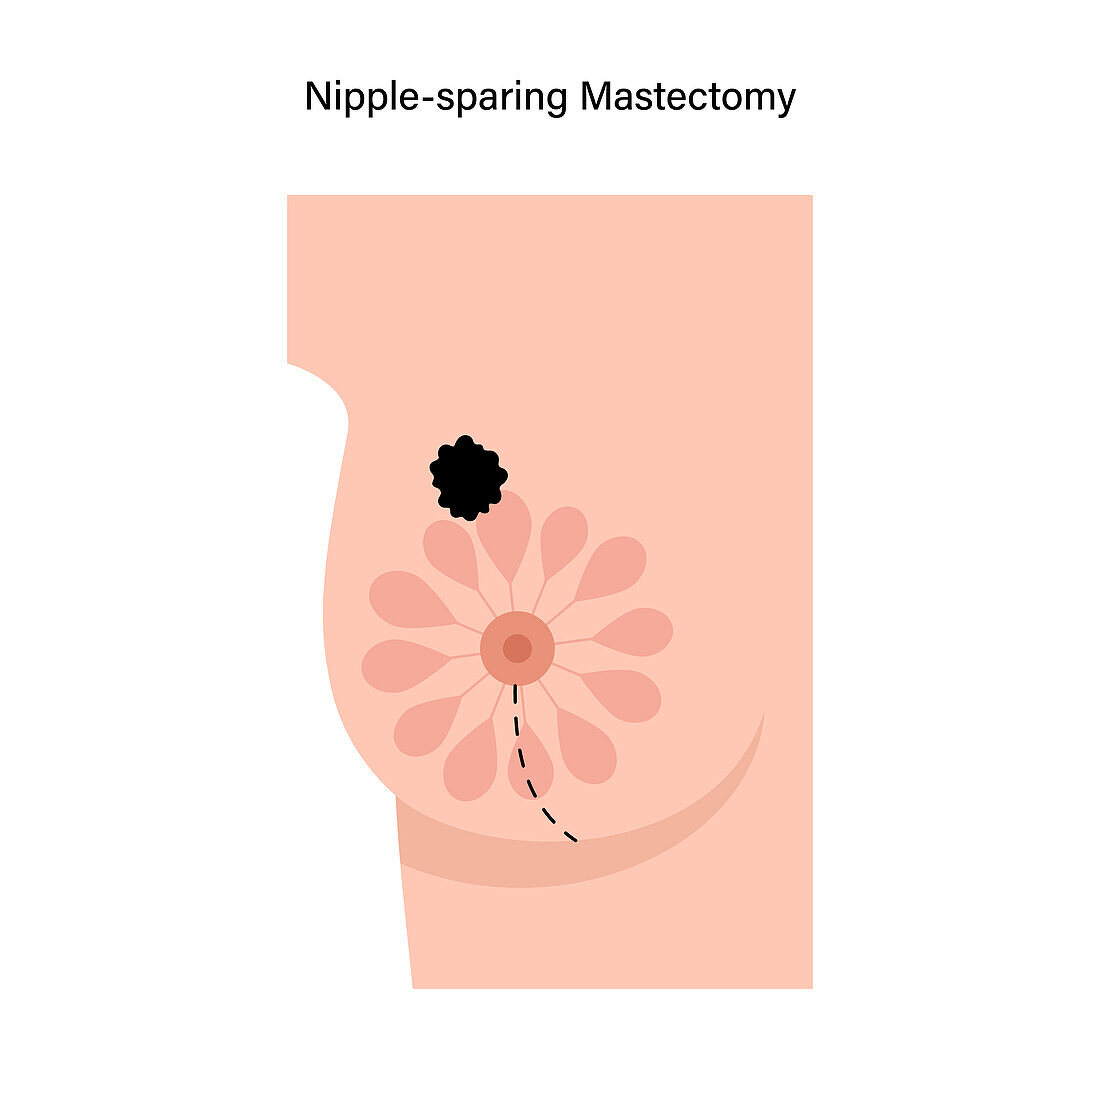 Female nipple sparing mastectomy, illustration